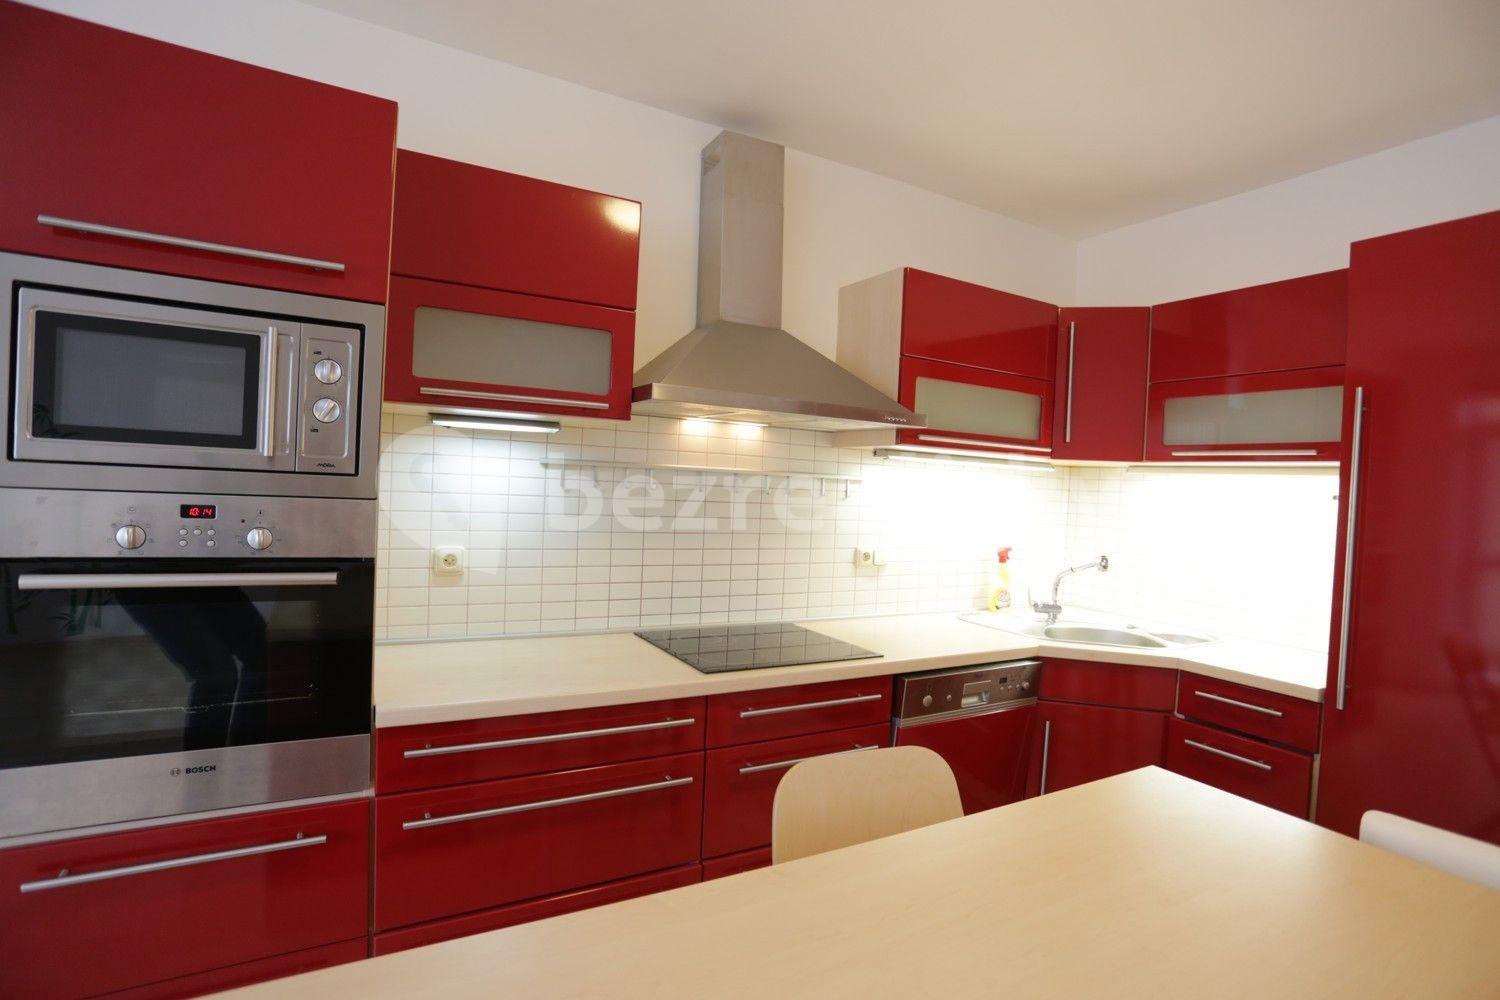 1 bedroom with open-plan kitchen flat to rent, 54 m², Zrzavého, Prague, Prague